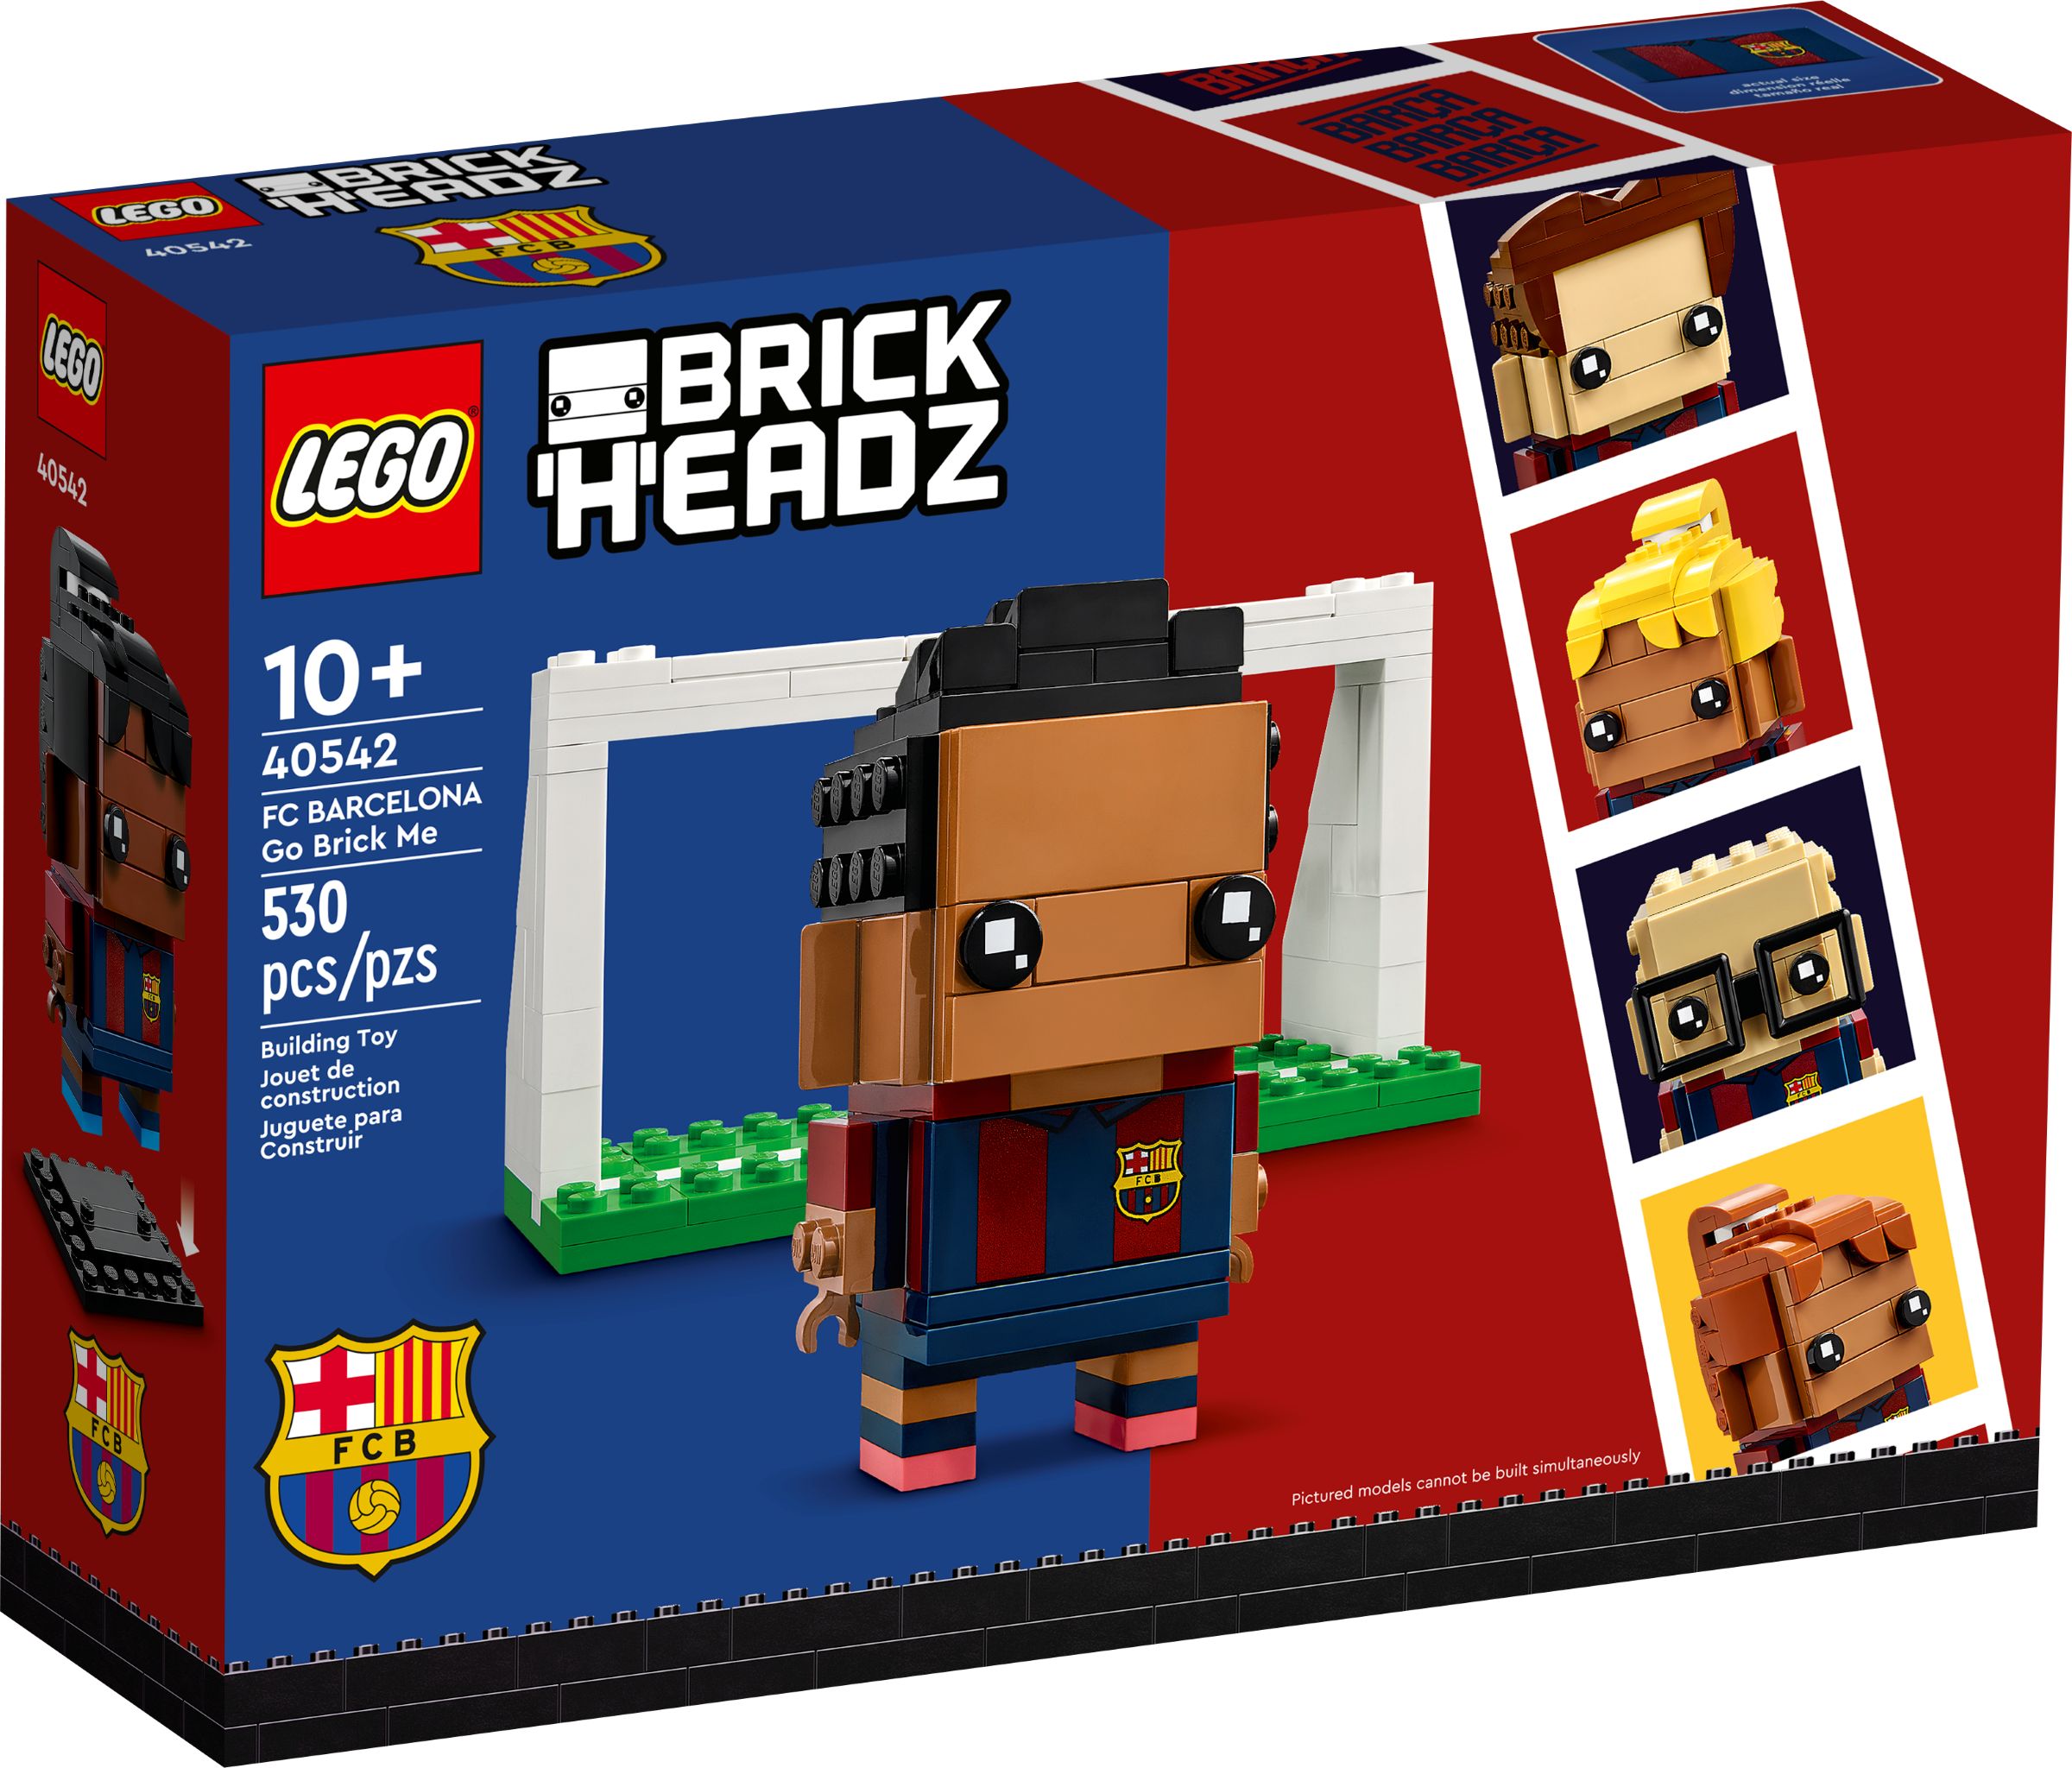 LEGO BrickHeadz 40542 FC Barcelona Go Brick Me LEGO_40542_alt1.jpg